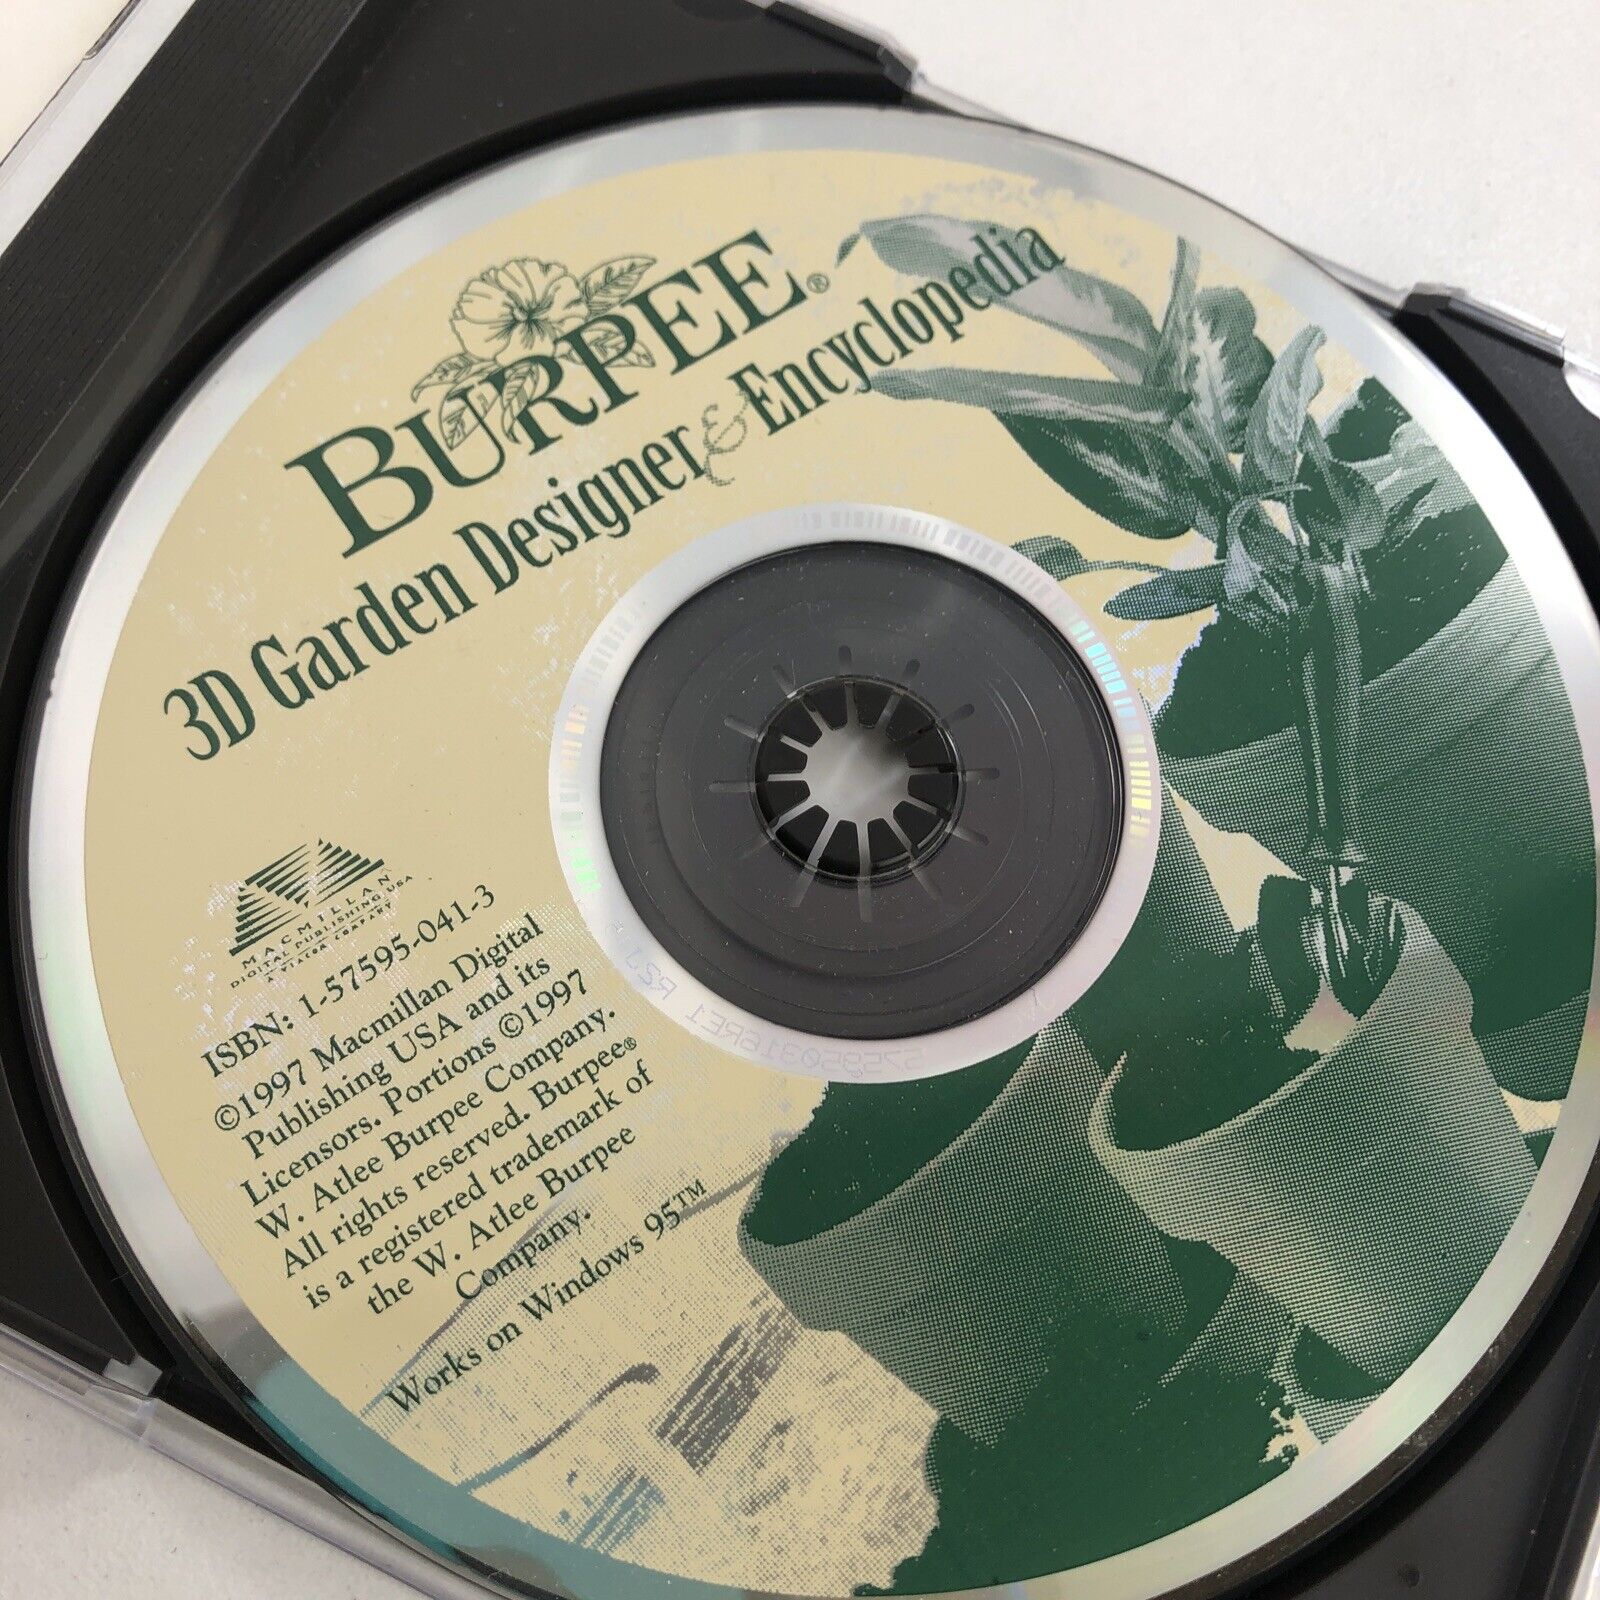 Burpee 3D Garden Designer & Encyclopedia CD-ROM Burpee Windows 95